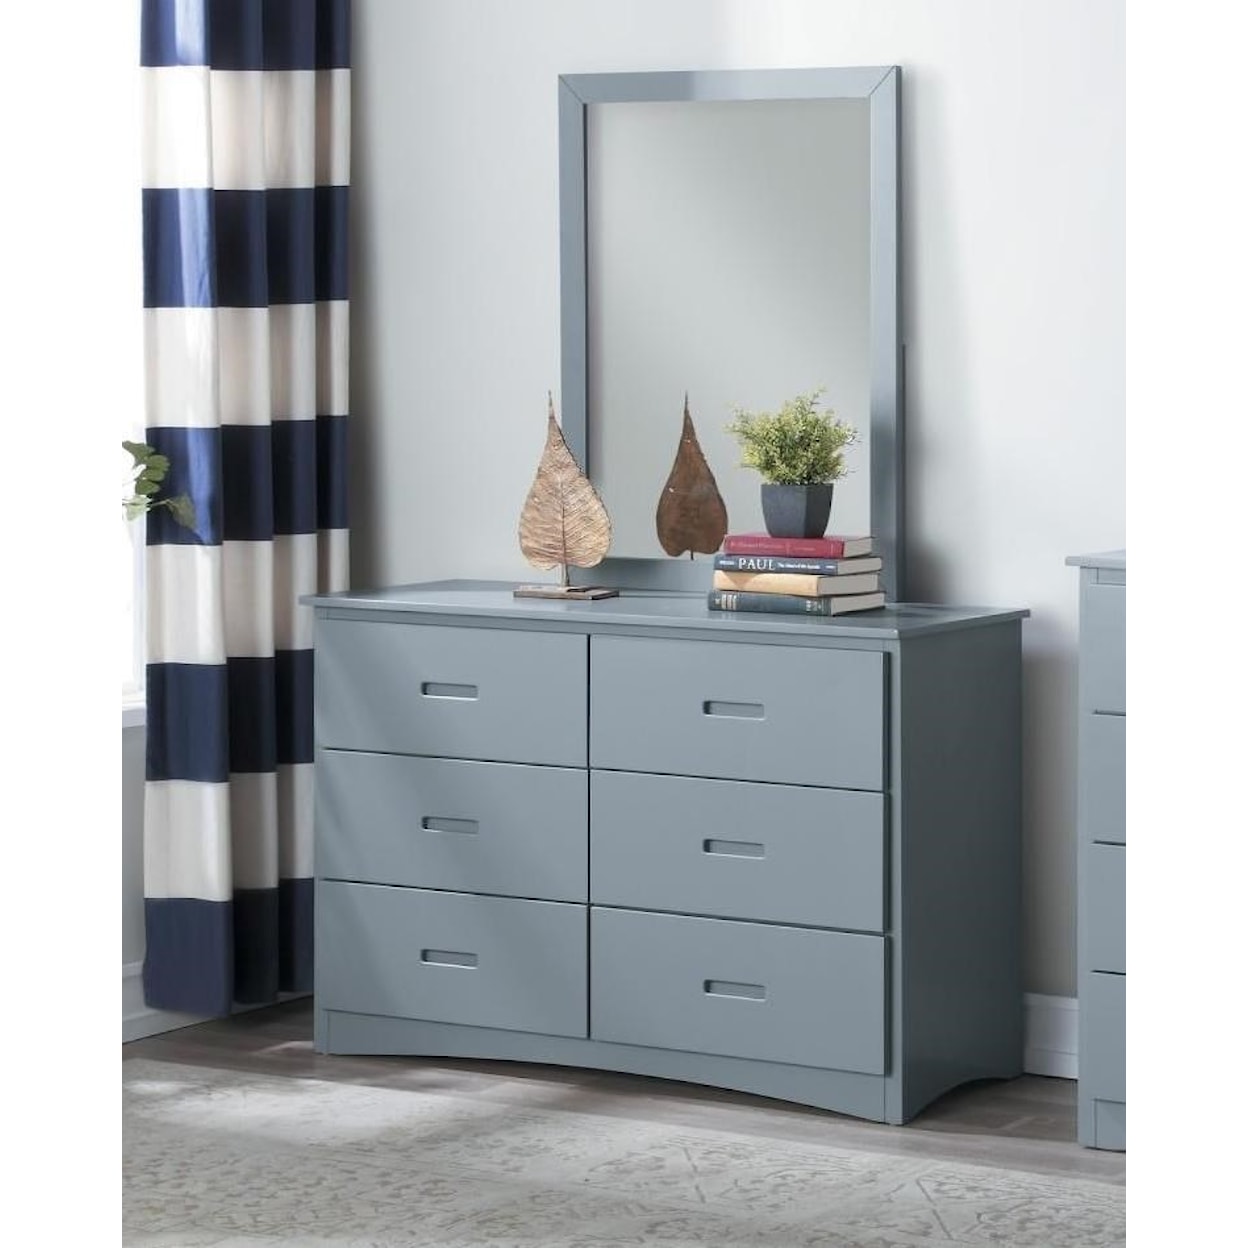 Homelegance Rowe Dresser and Mirror Set